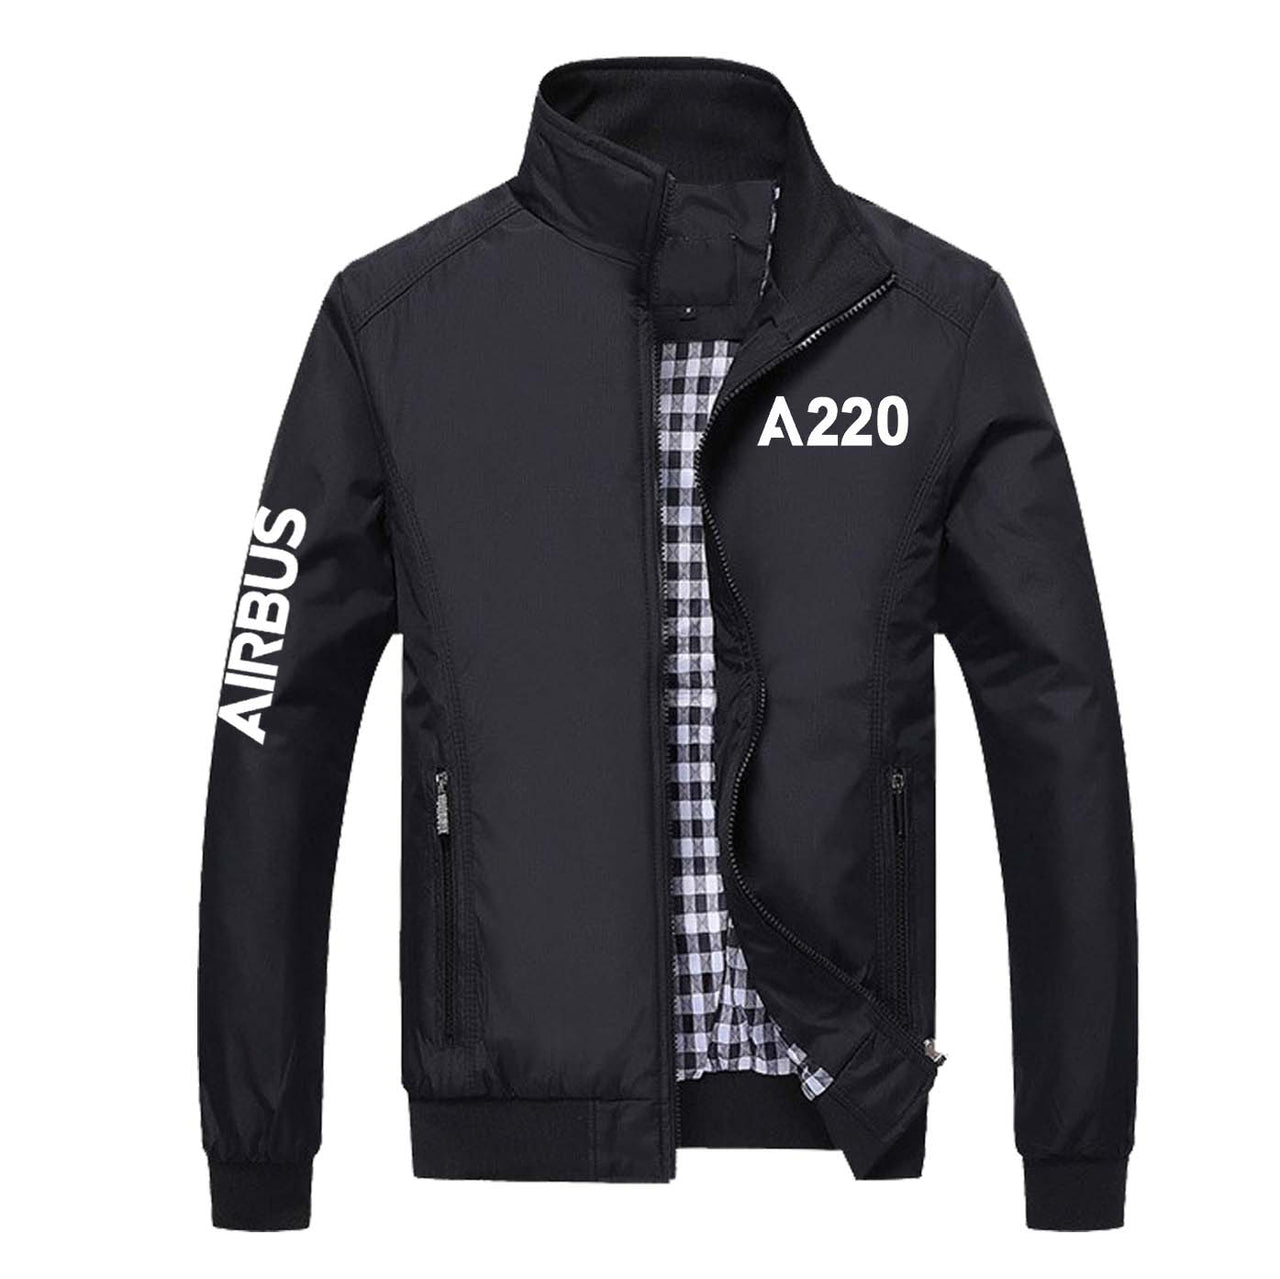 A220 Flat Text Designed Stylish Jackets